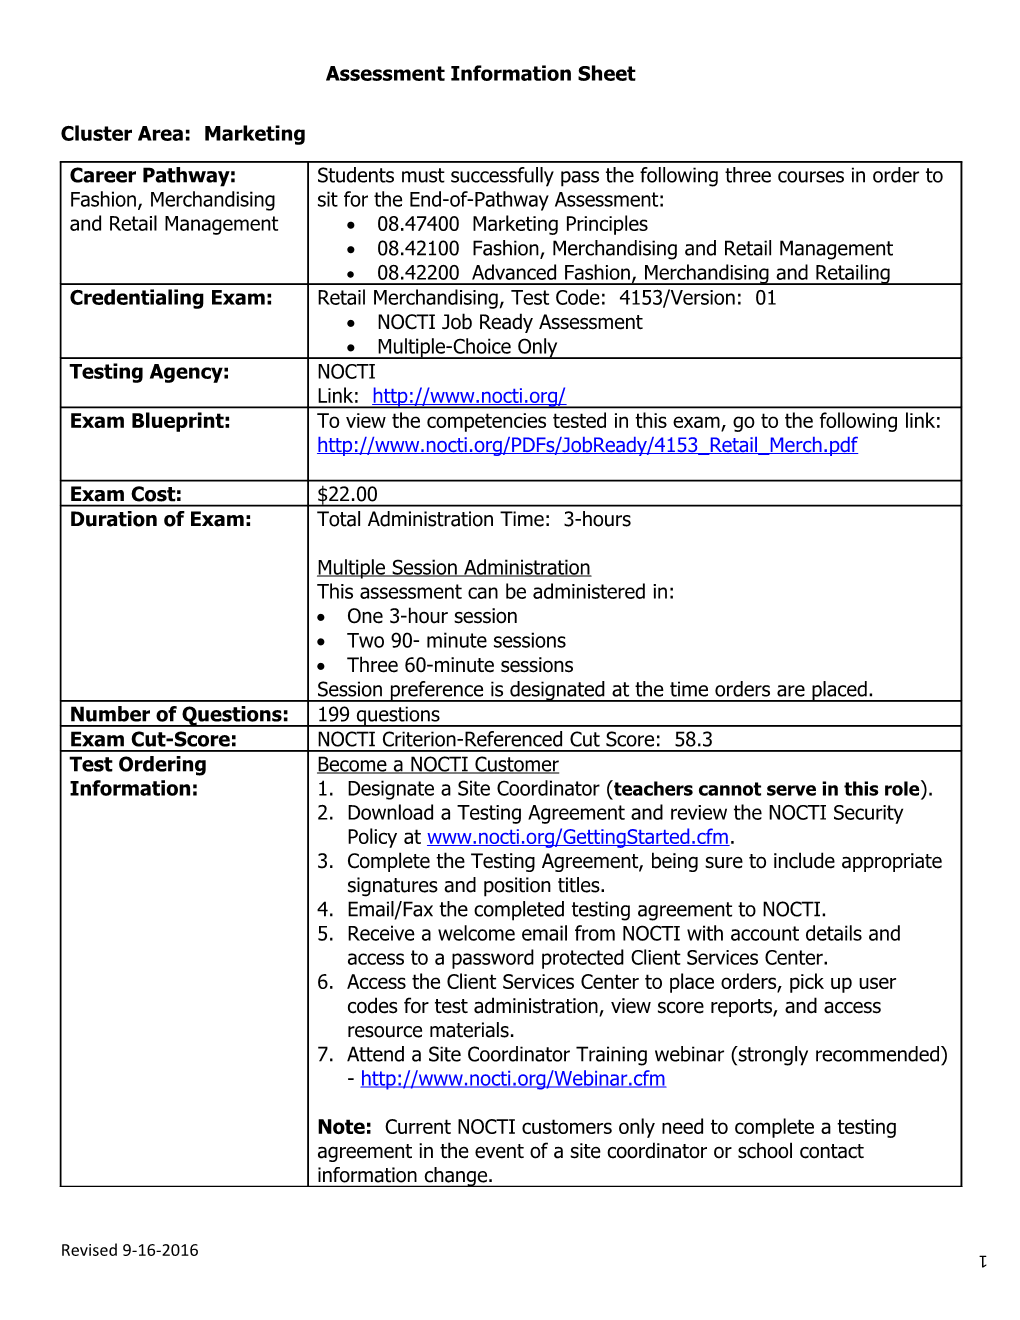 Assessment Information Sheet s1